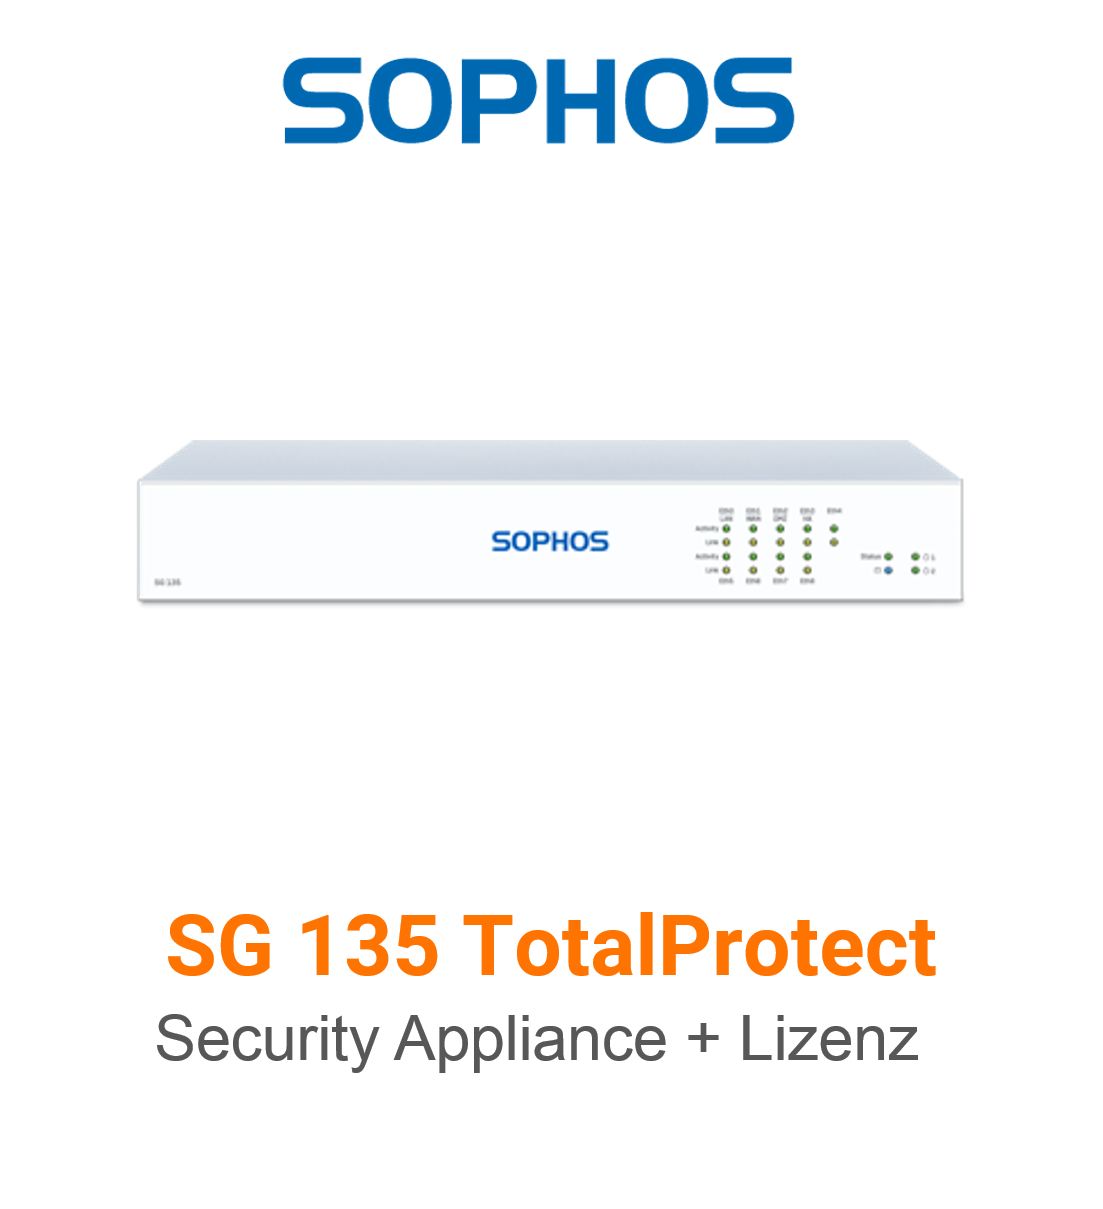 Sophos SG 135 TotalProtect Bundle (Hardware + Lizenz)